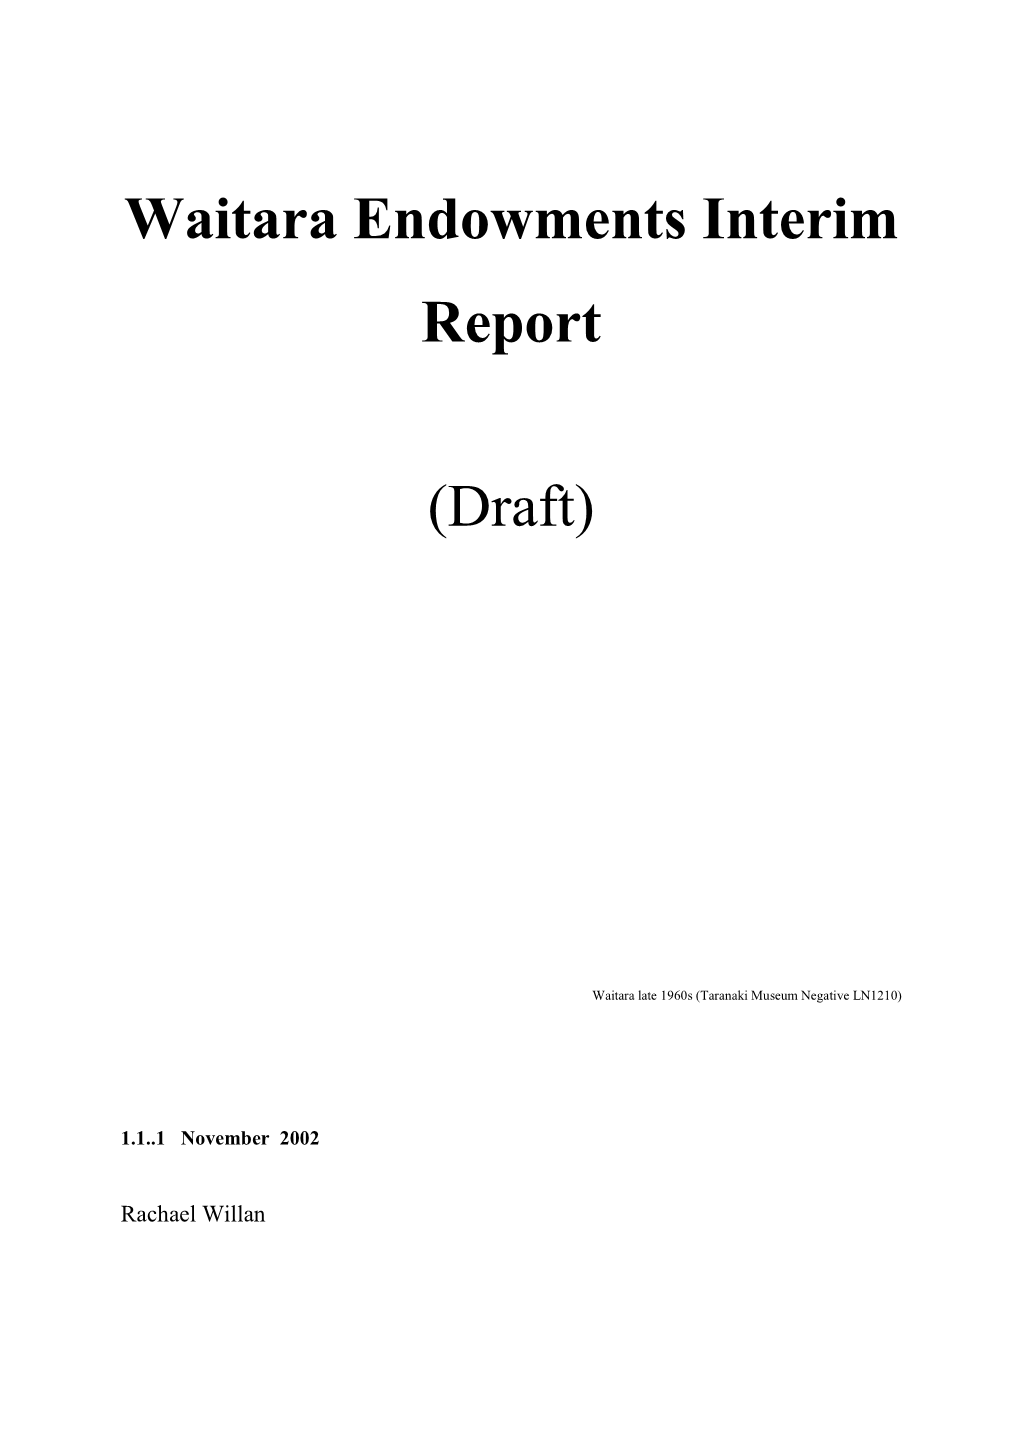 Waitara Endowments Interim Report (Draft)